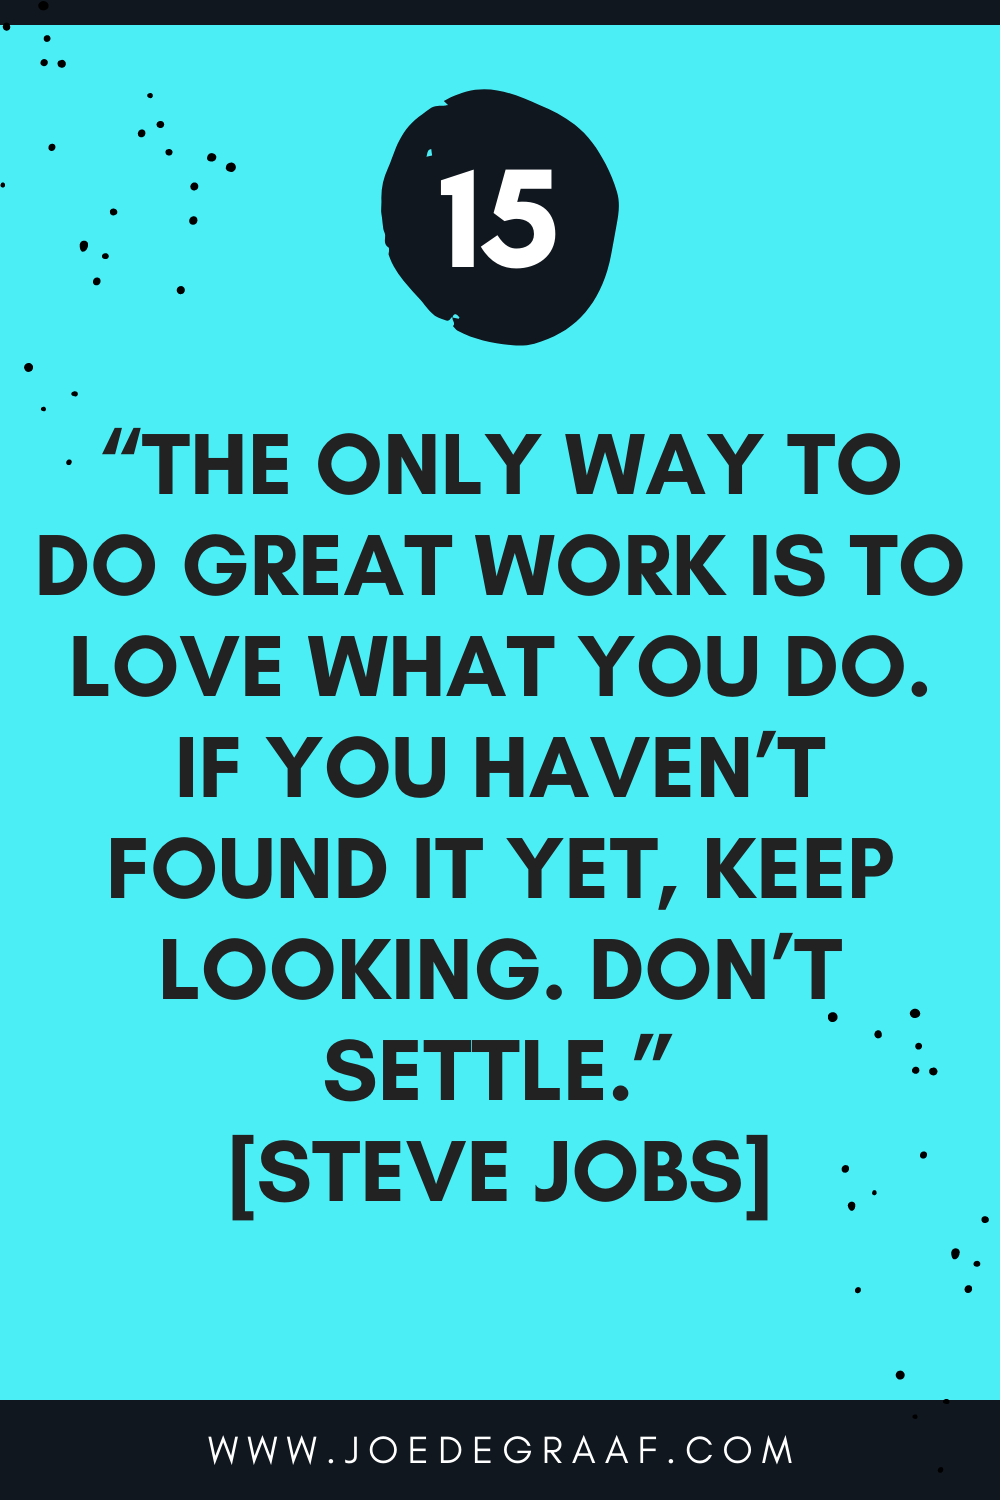 Steve Jobs work motivation quote